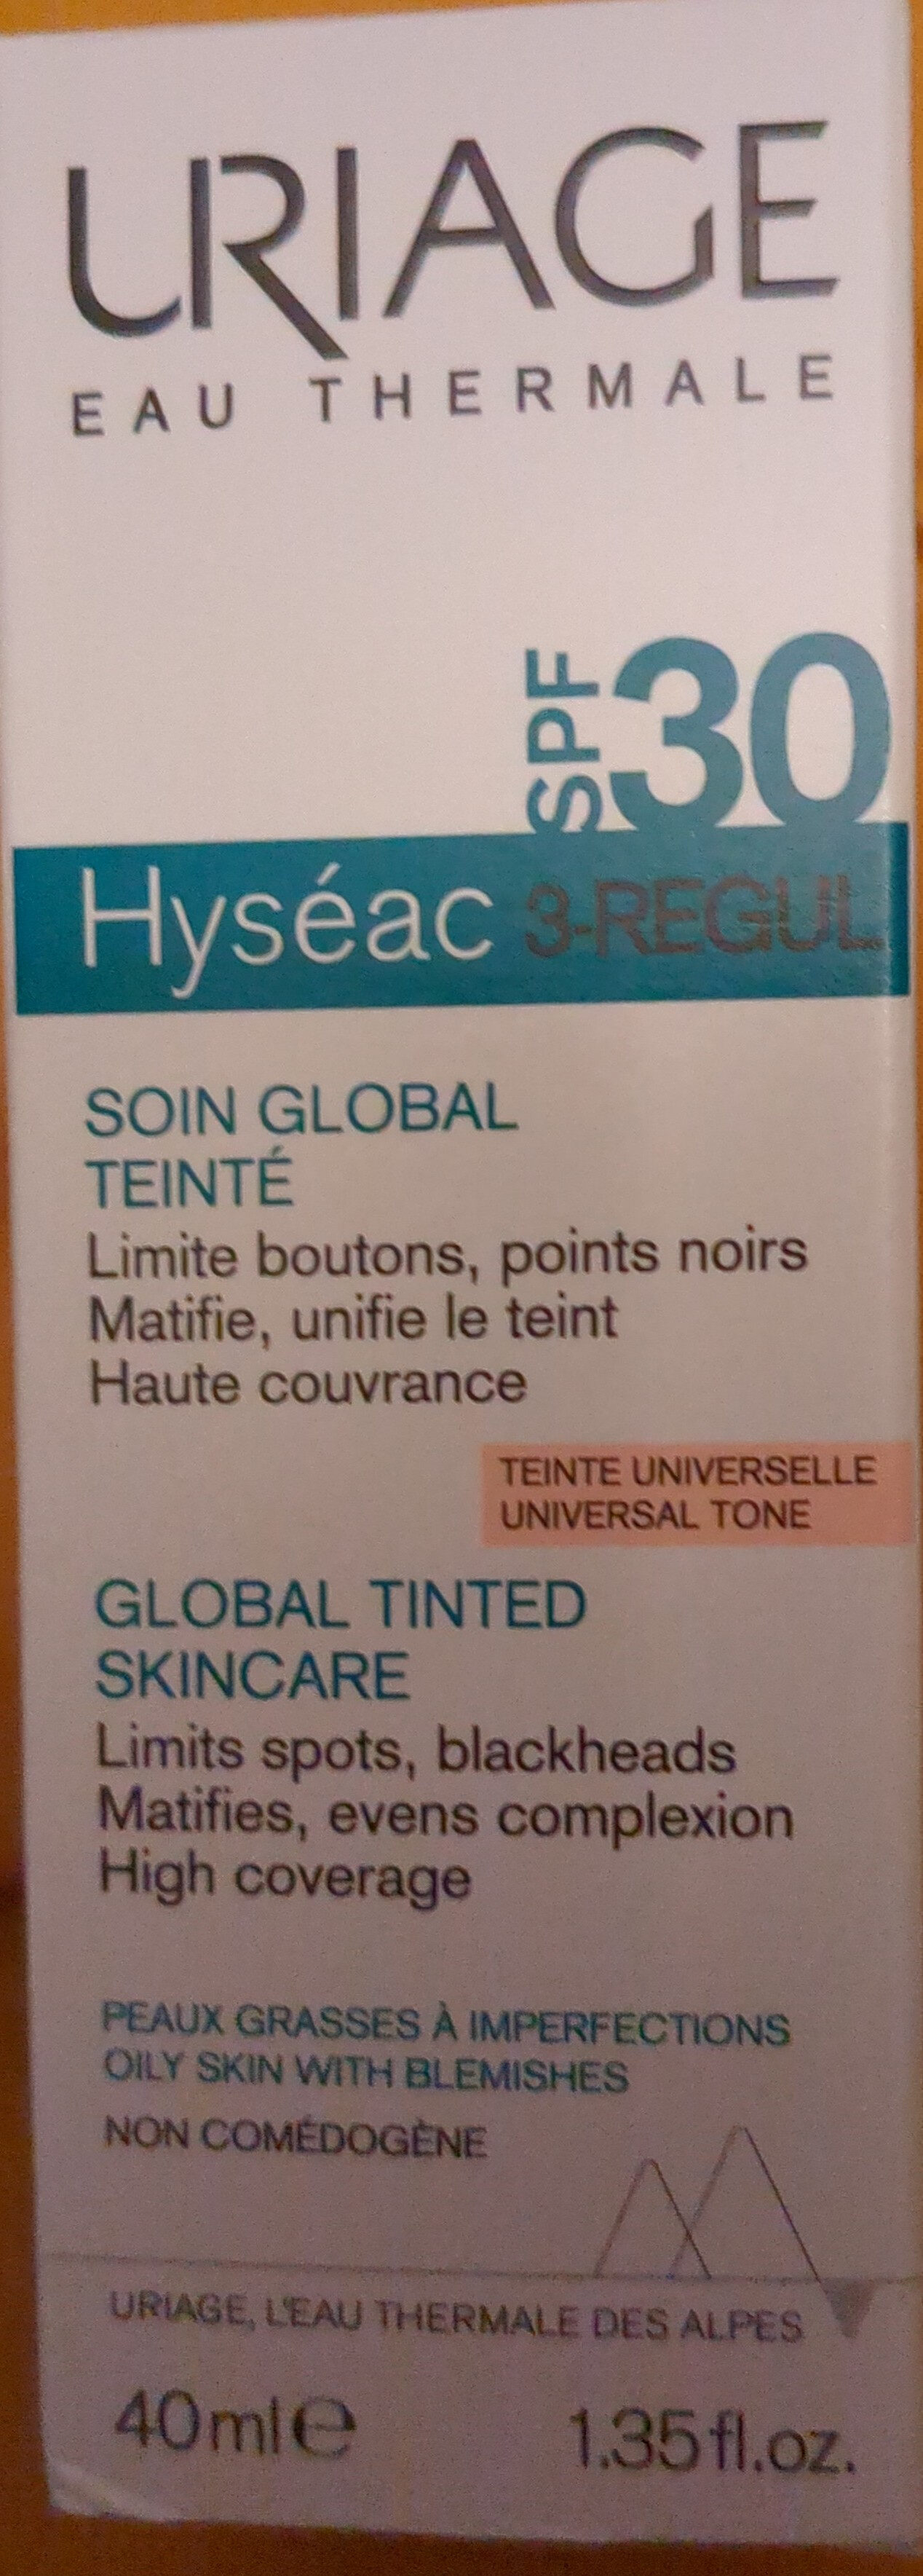 Hyséac 3-REGUL SPF30 - Продукт - fr